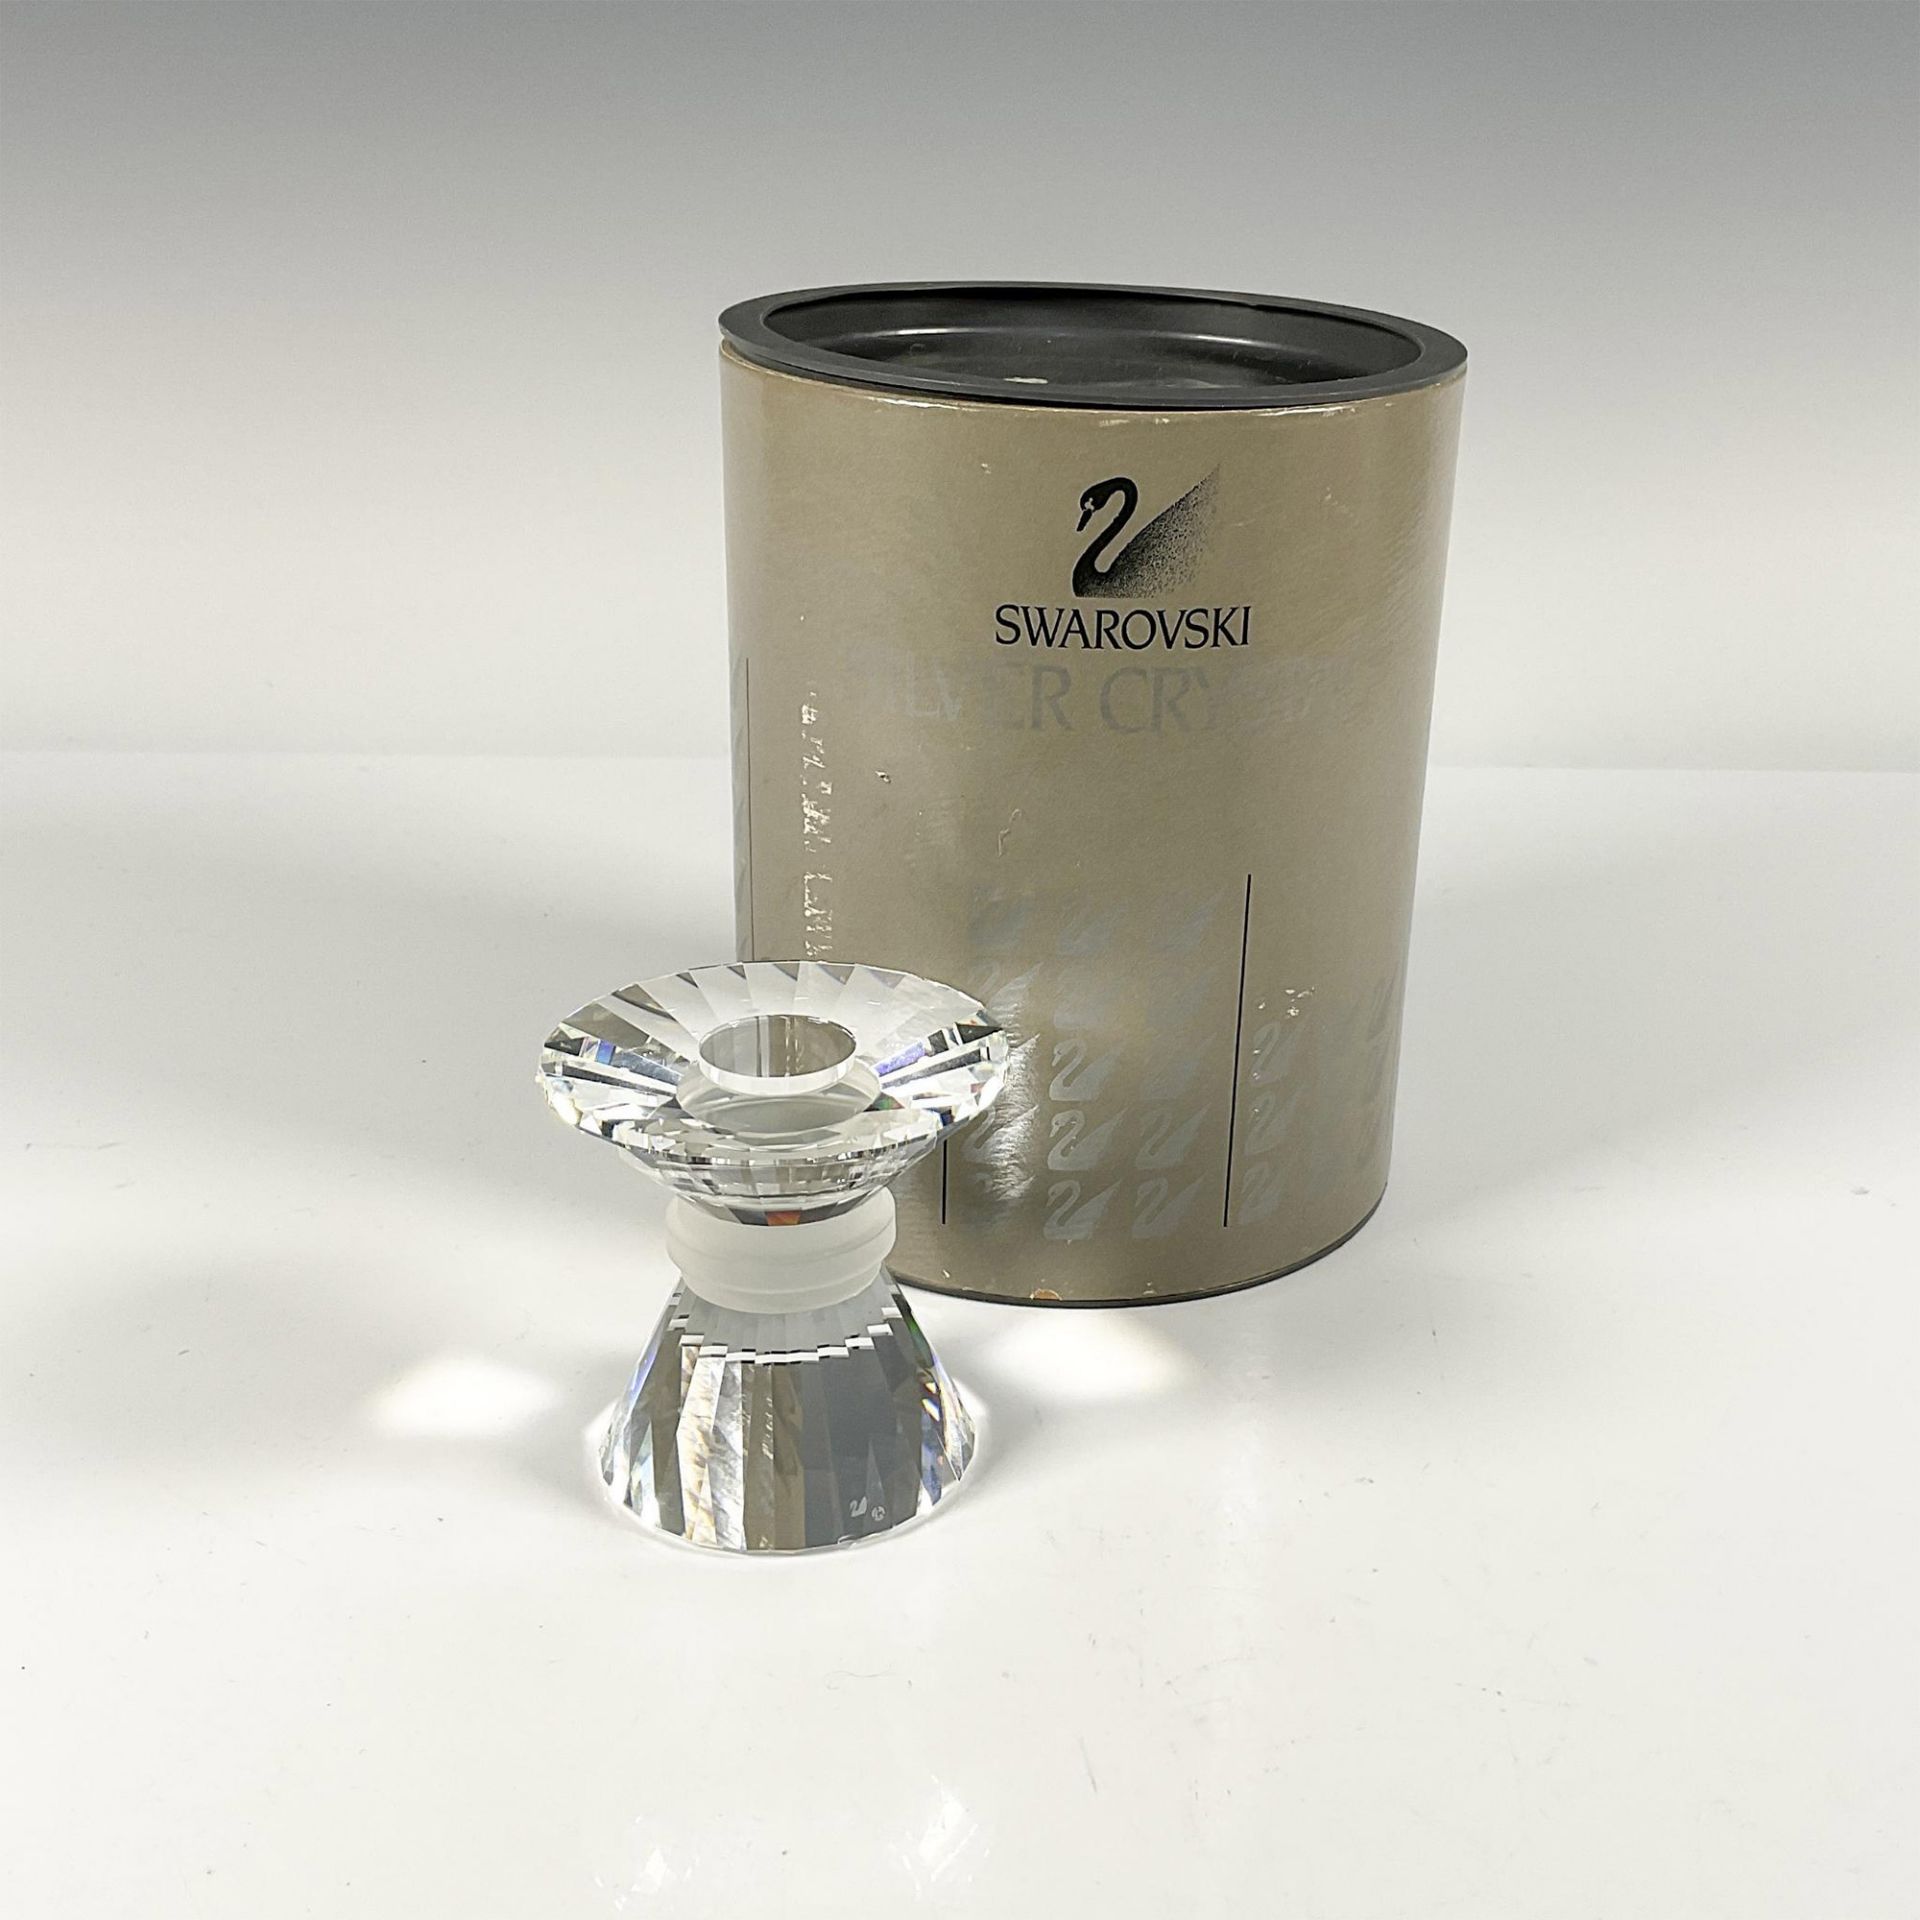 Swarovski Lead Crystal Candleholder - Image 4 of 4